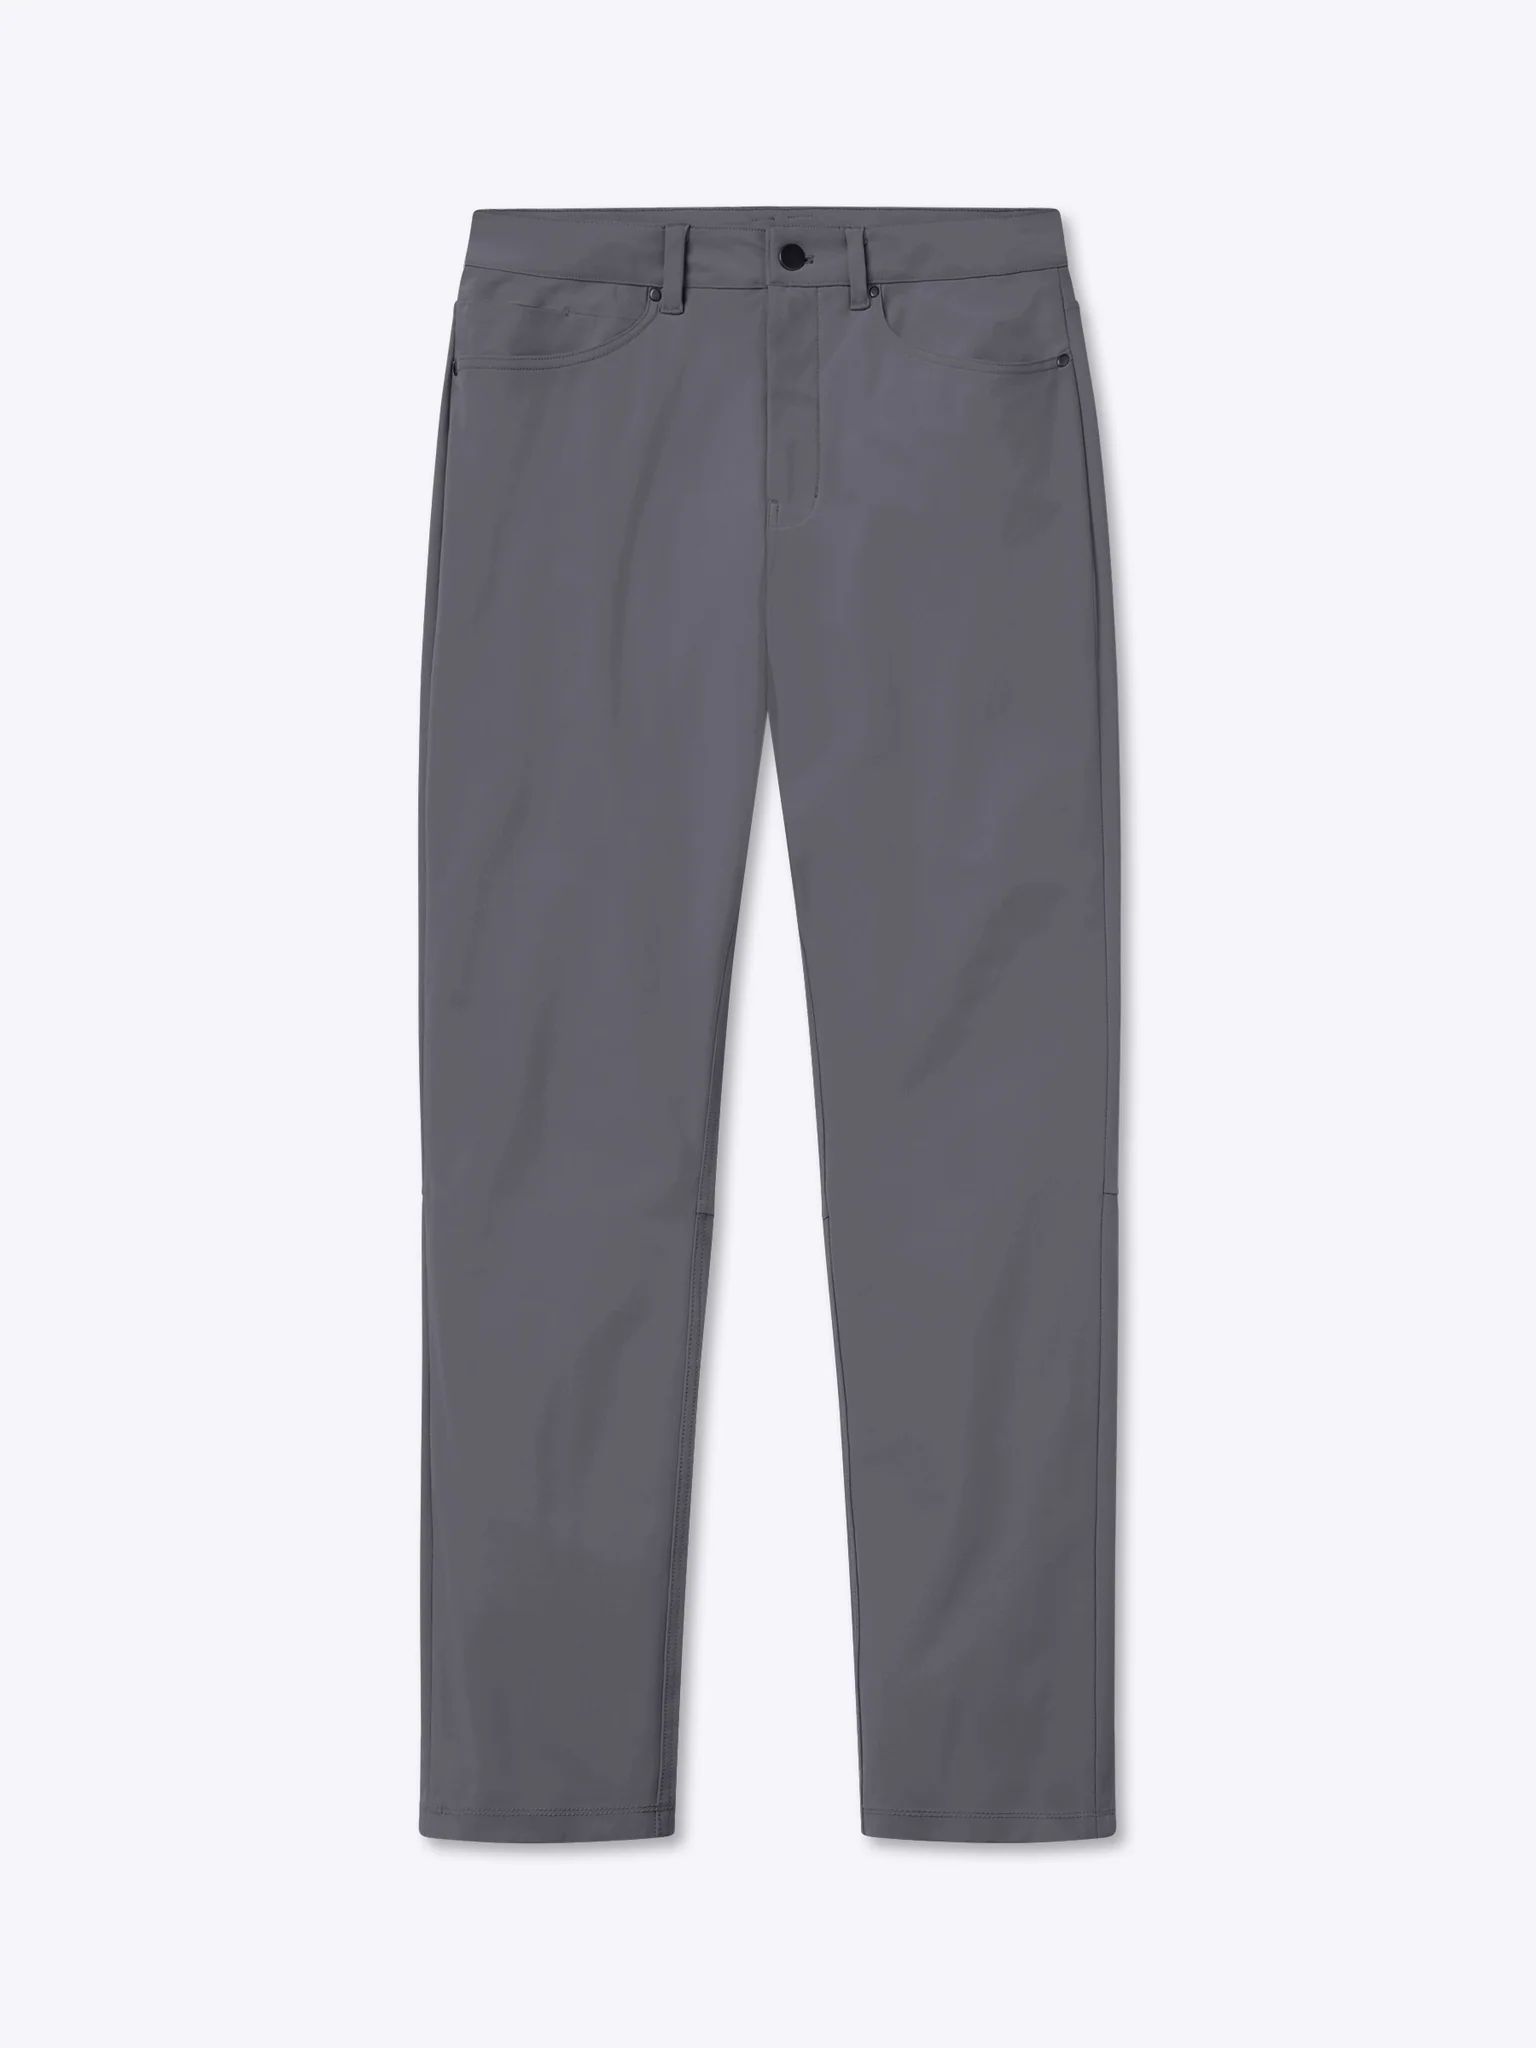 AO 5-Pocket Pant | Cuts Clothing Inc.